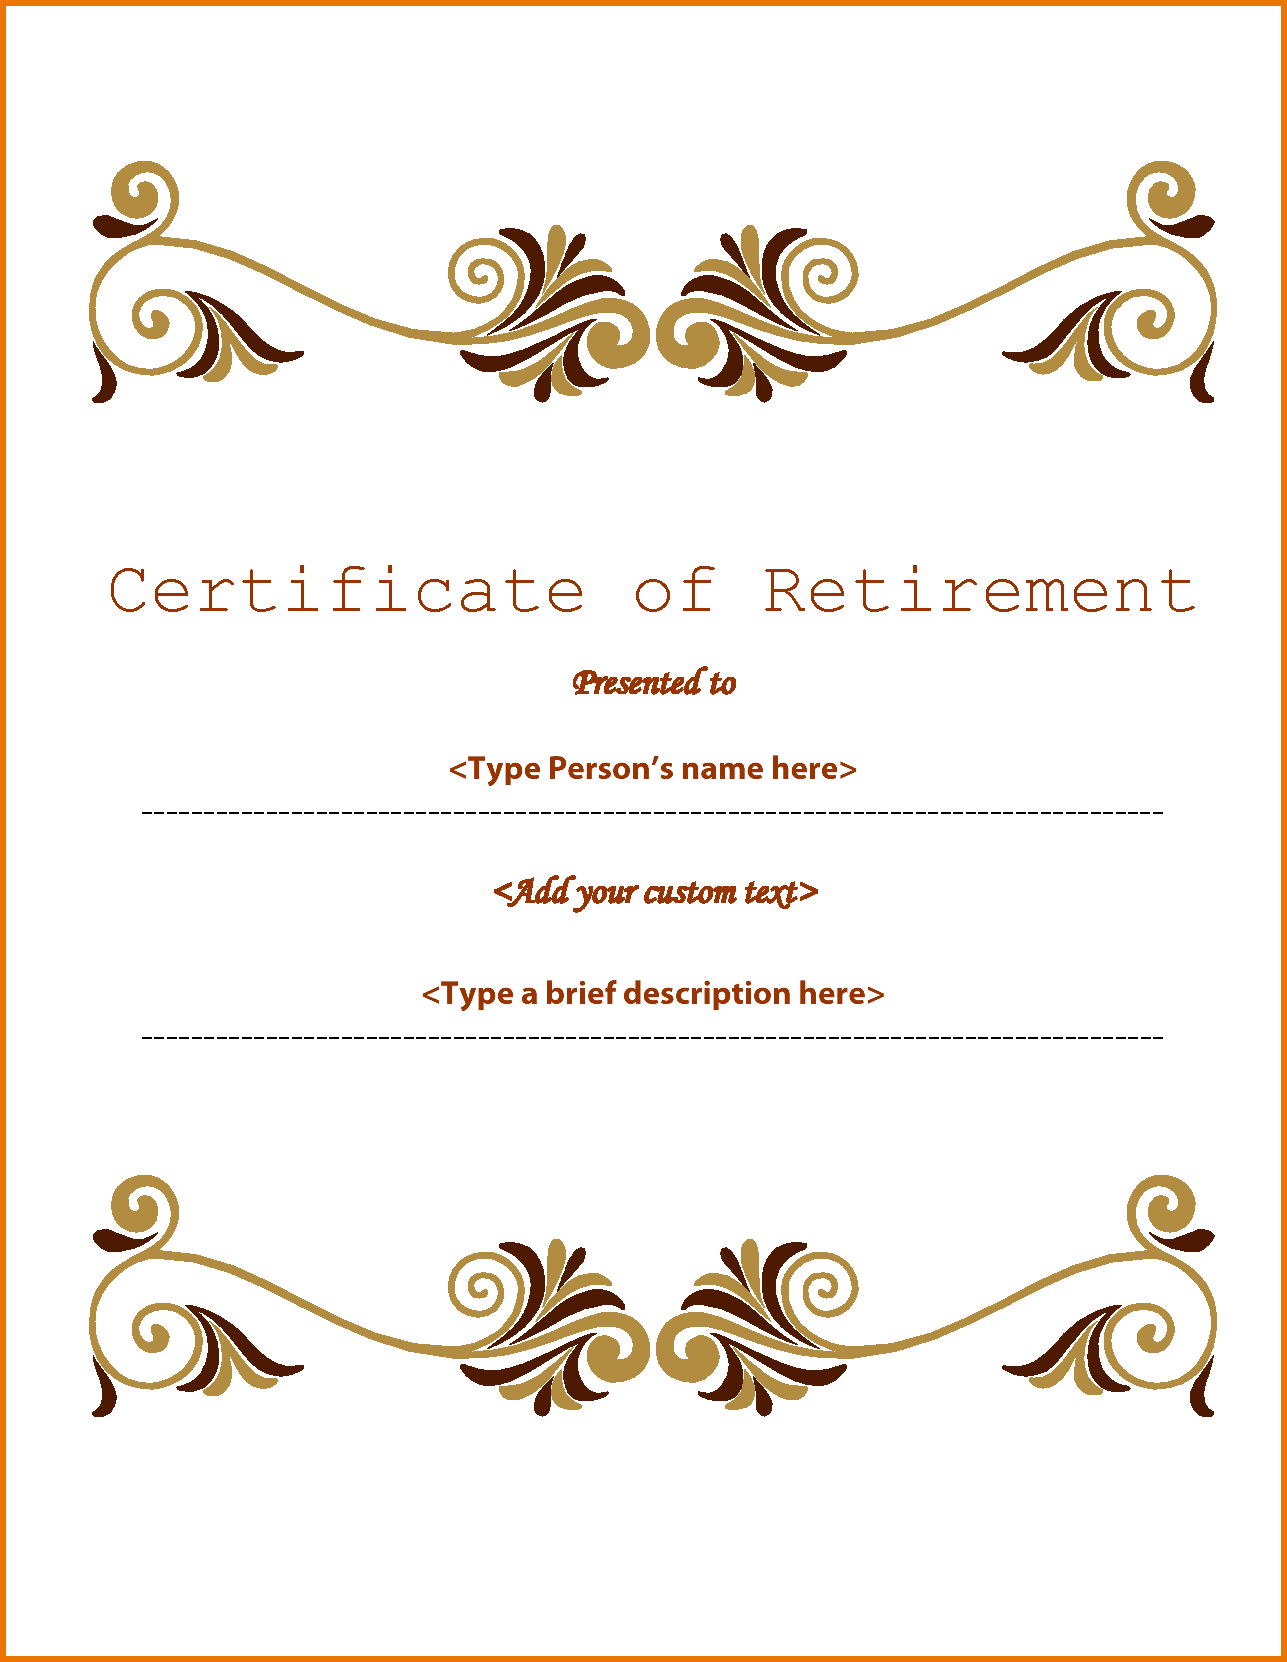 Retirement Certificate Template.65840807 | Scope Of Work With Retirement Certificate Template